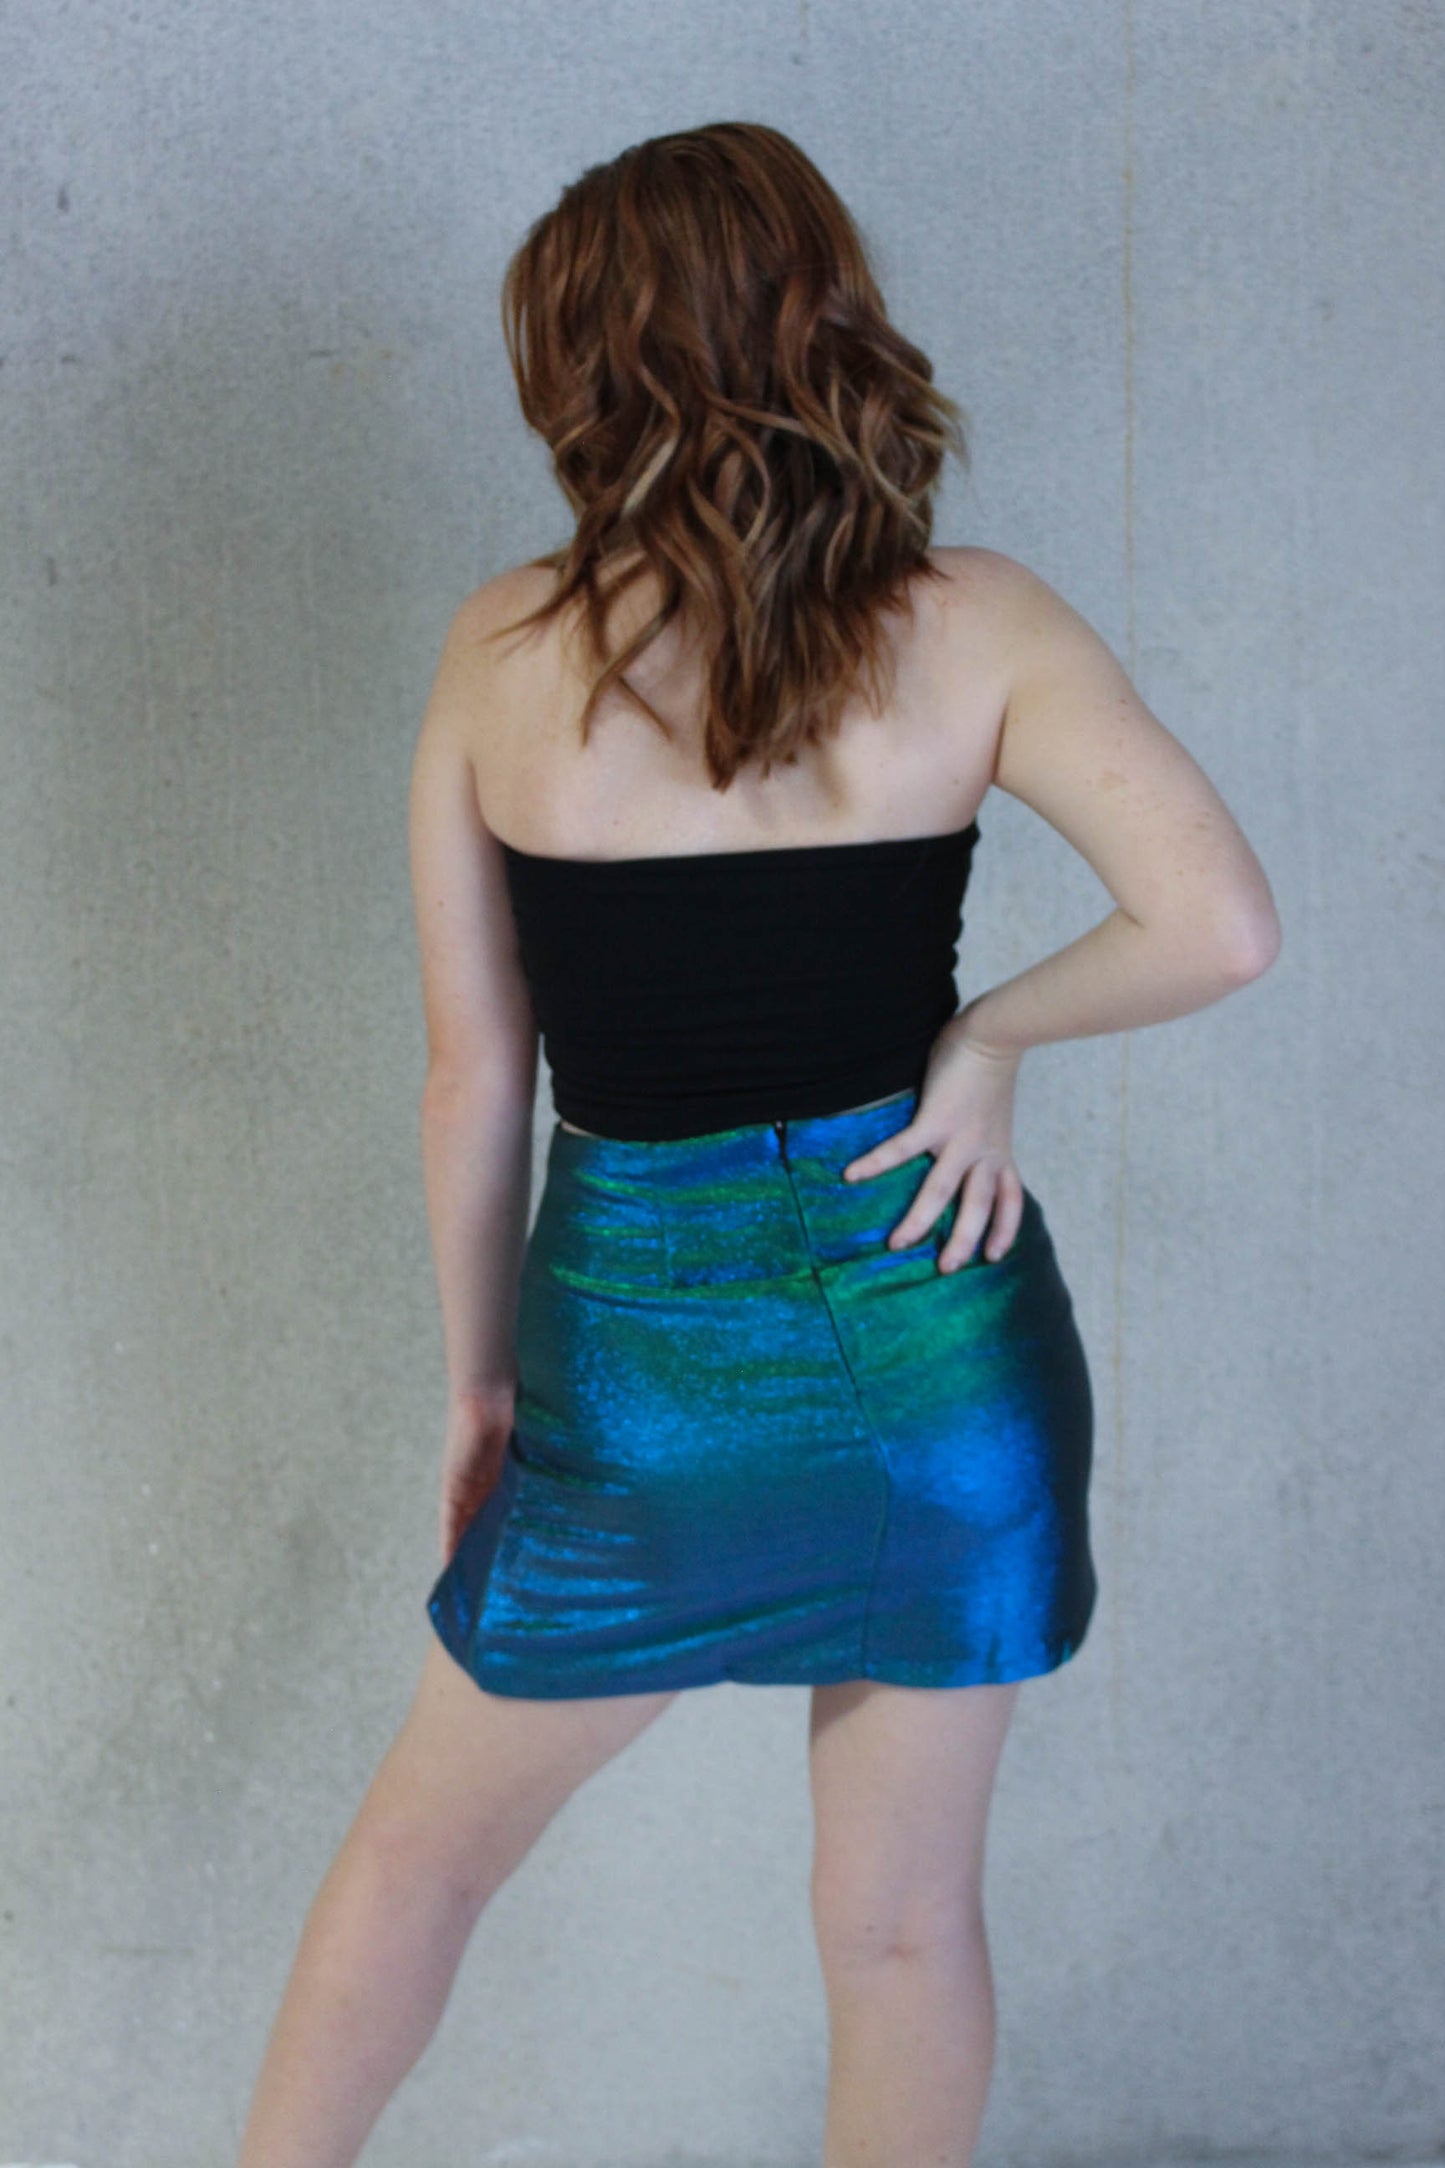 Mermaid Skirt